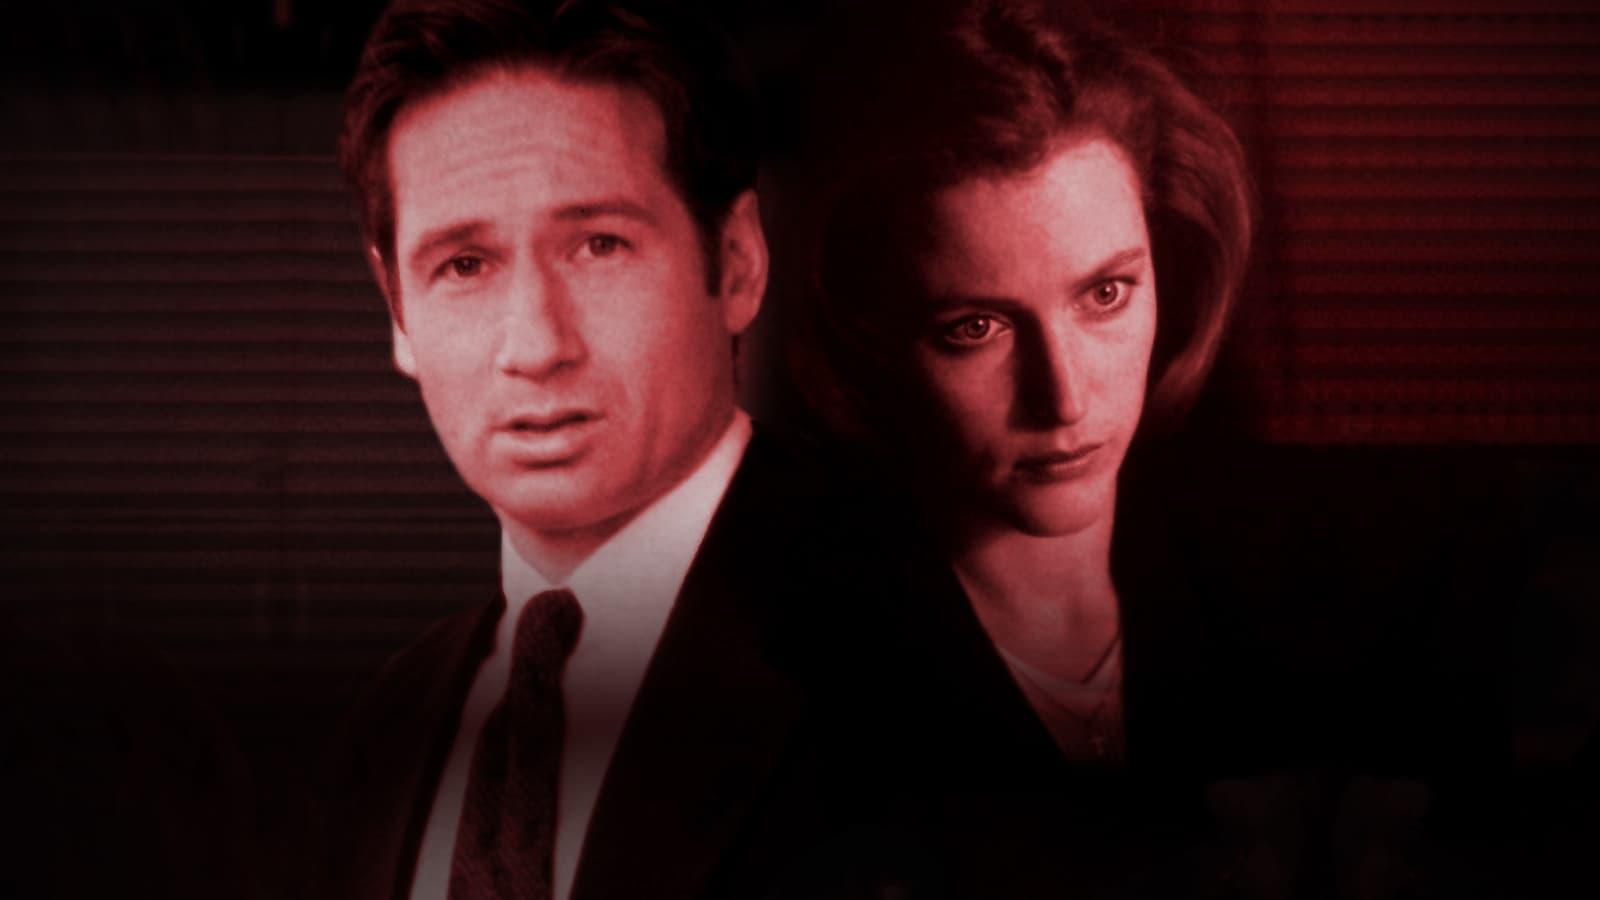 Inside The X-Files backdrop